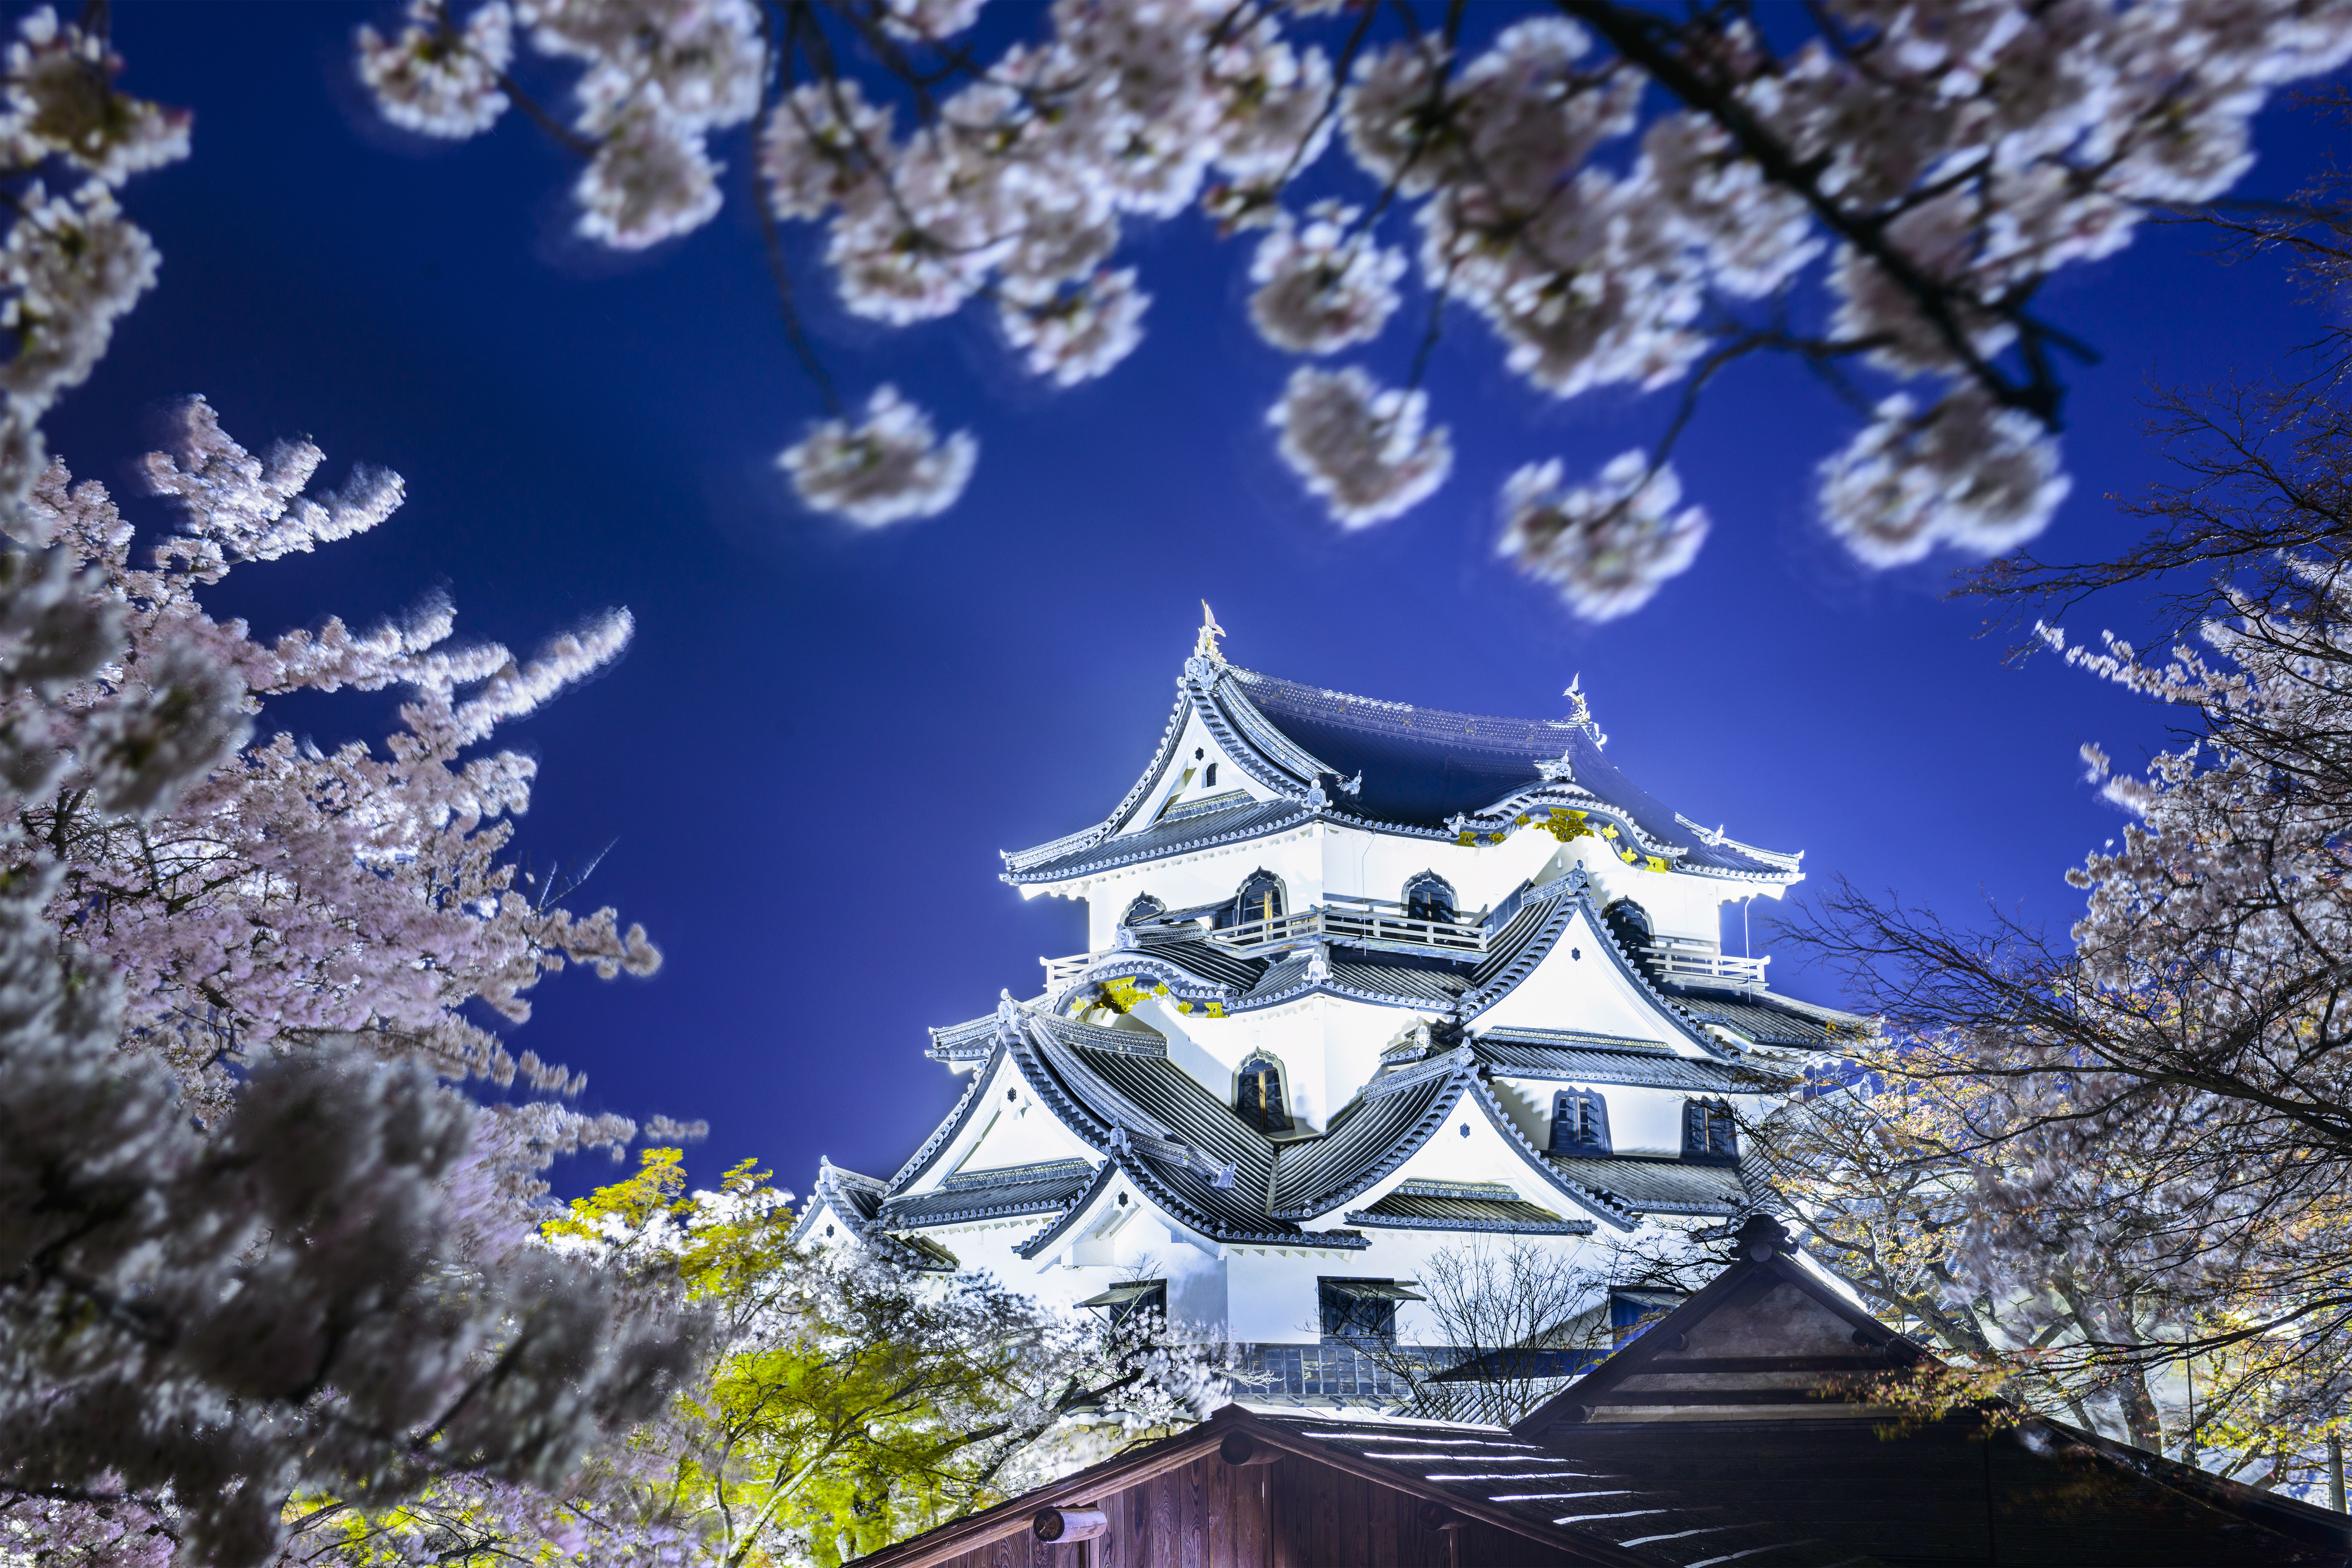  Wallpaper Hikone Japan Hikone Castle Hikone Japan spring cherry